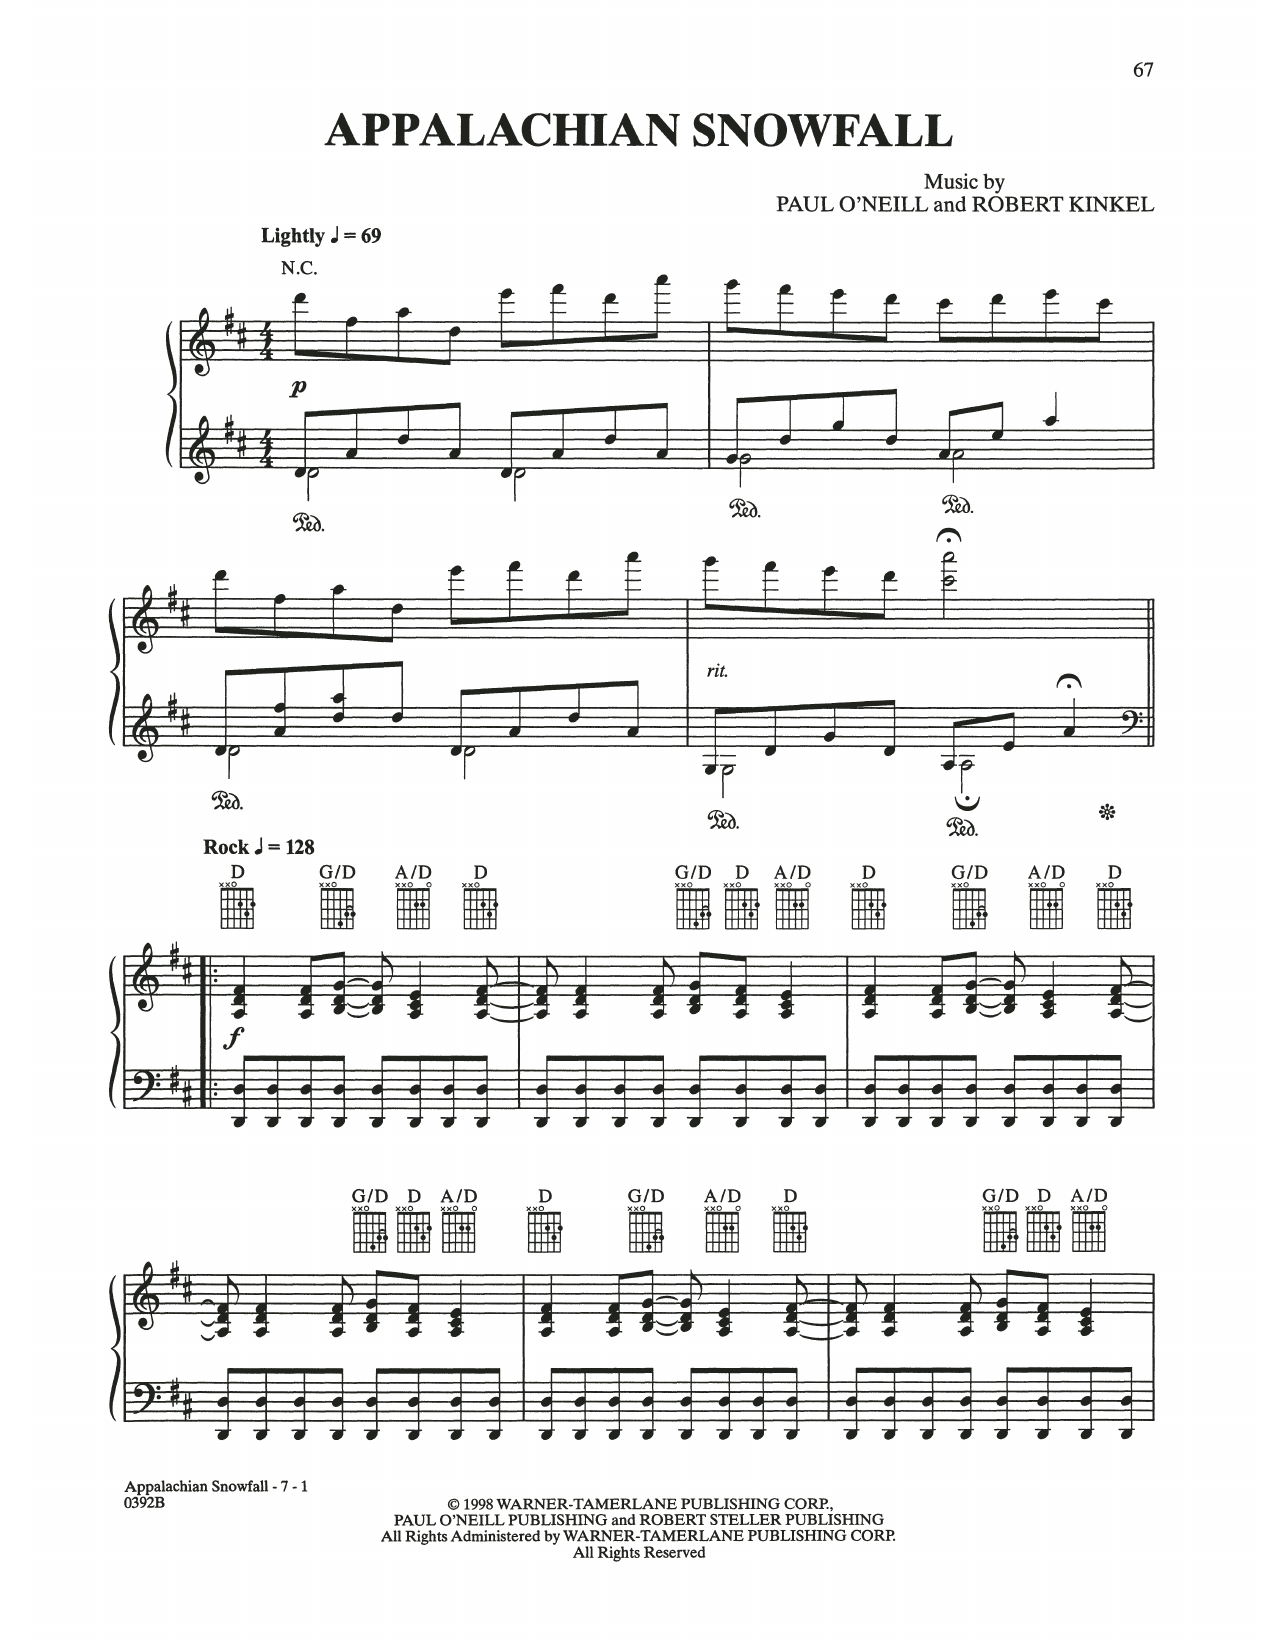 Trans-Siberian Orchestra Appalachian Snowfall Sheet Music Notes & Chords for Piano Solo - Download or Print PDF